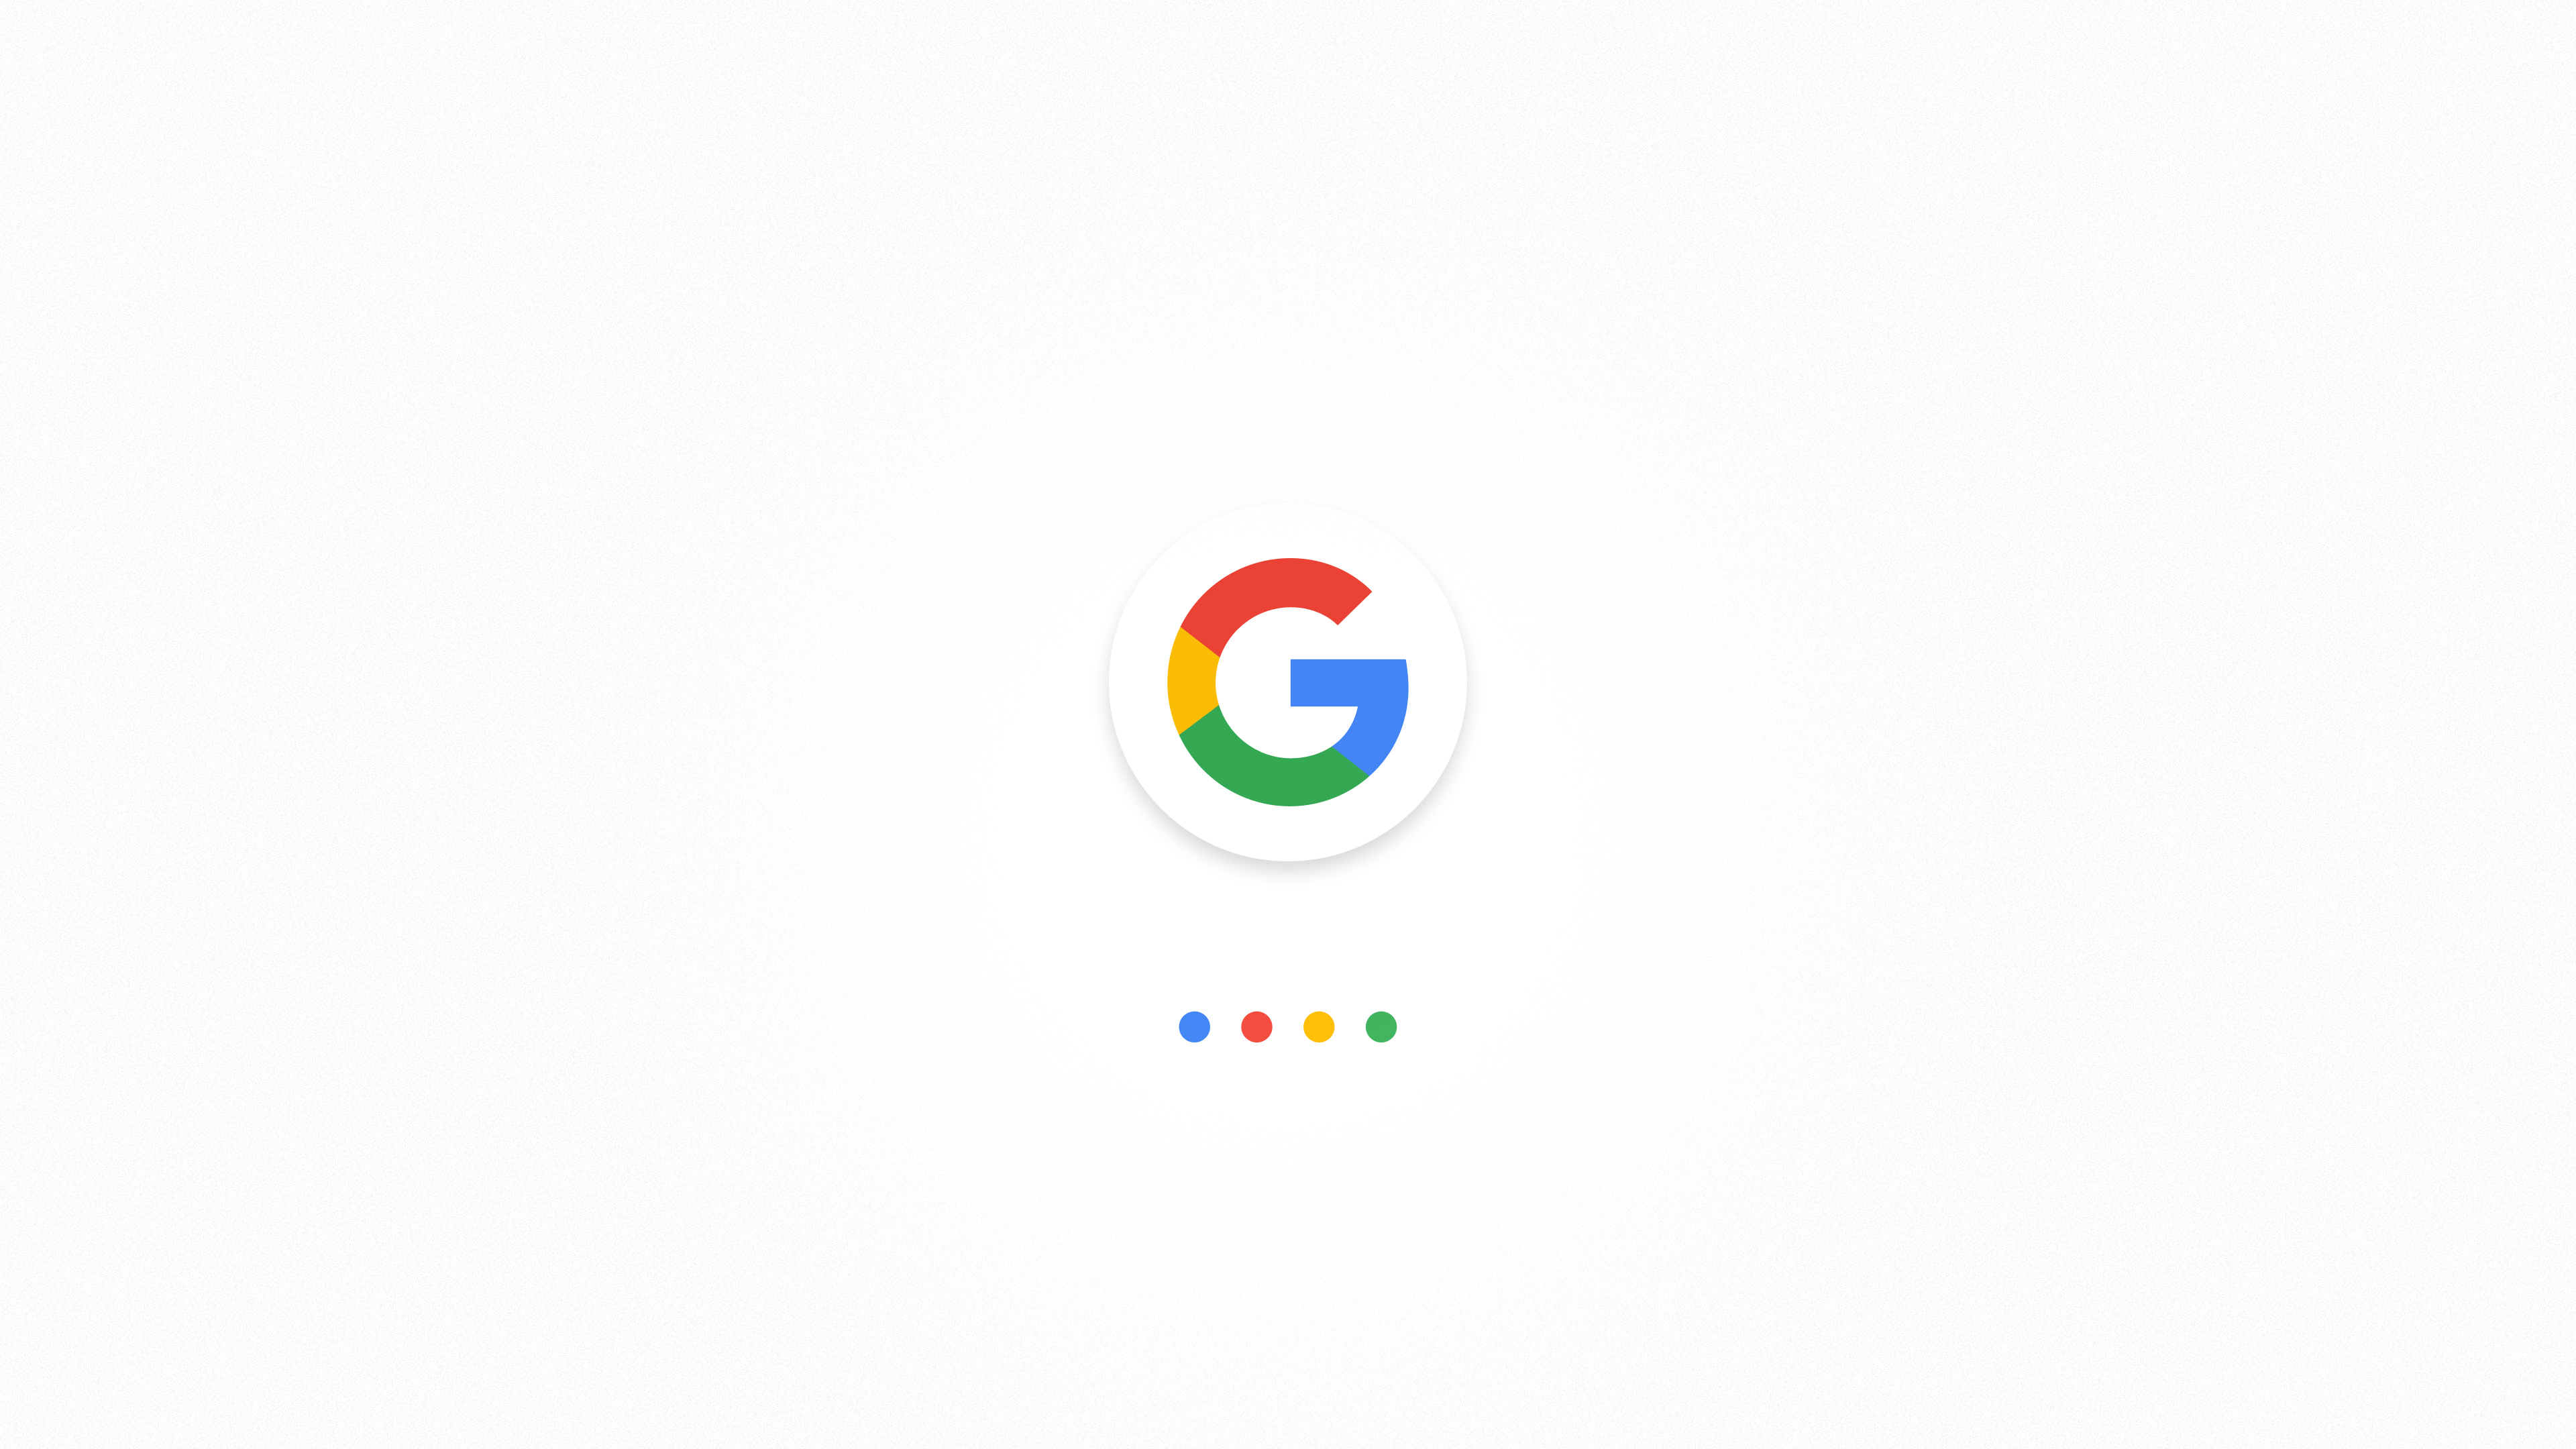 4k Google G Minimalistic Wallpaper By Jovicasmileski On